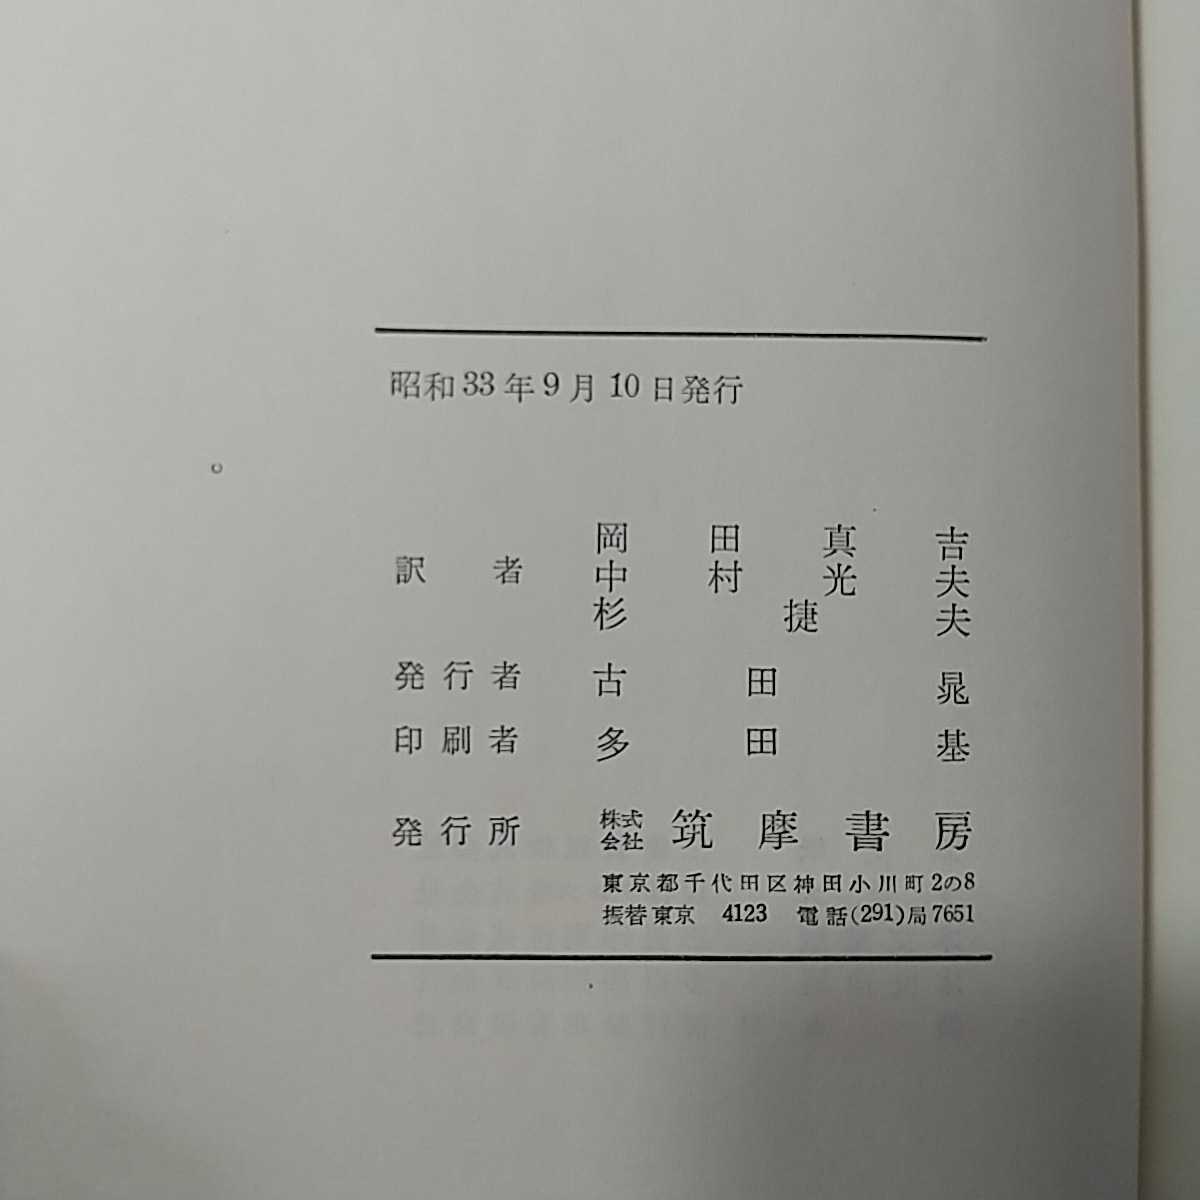 zaa-245♪モーパッサン　　　モーパッサン/岡田真吉他訳 (1958年) 世界文学大系44 筑摩書房 